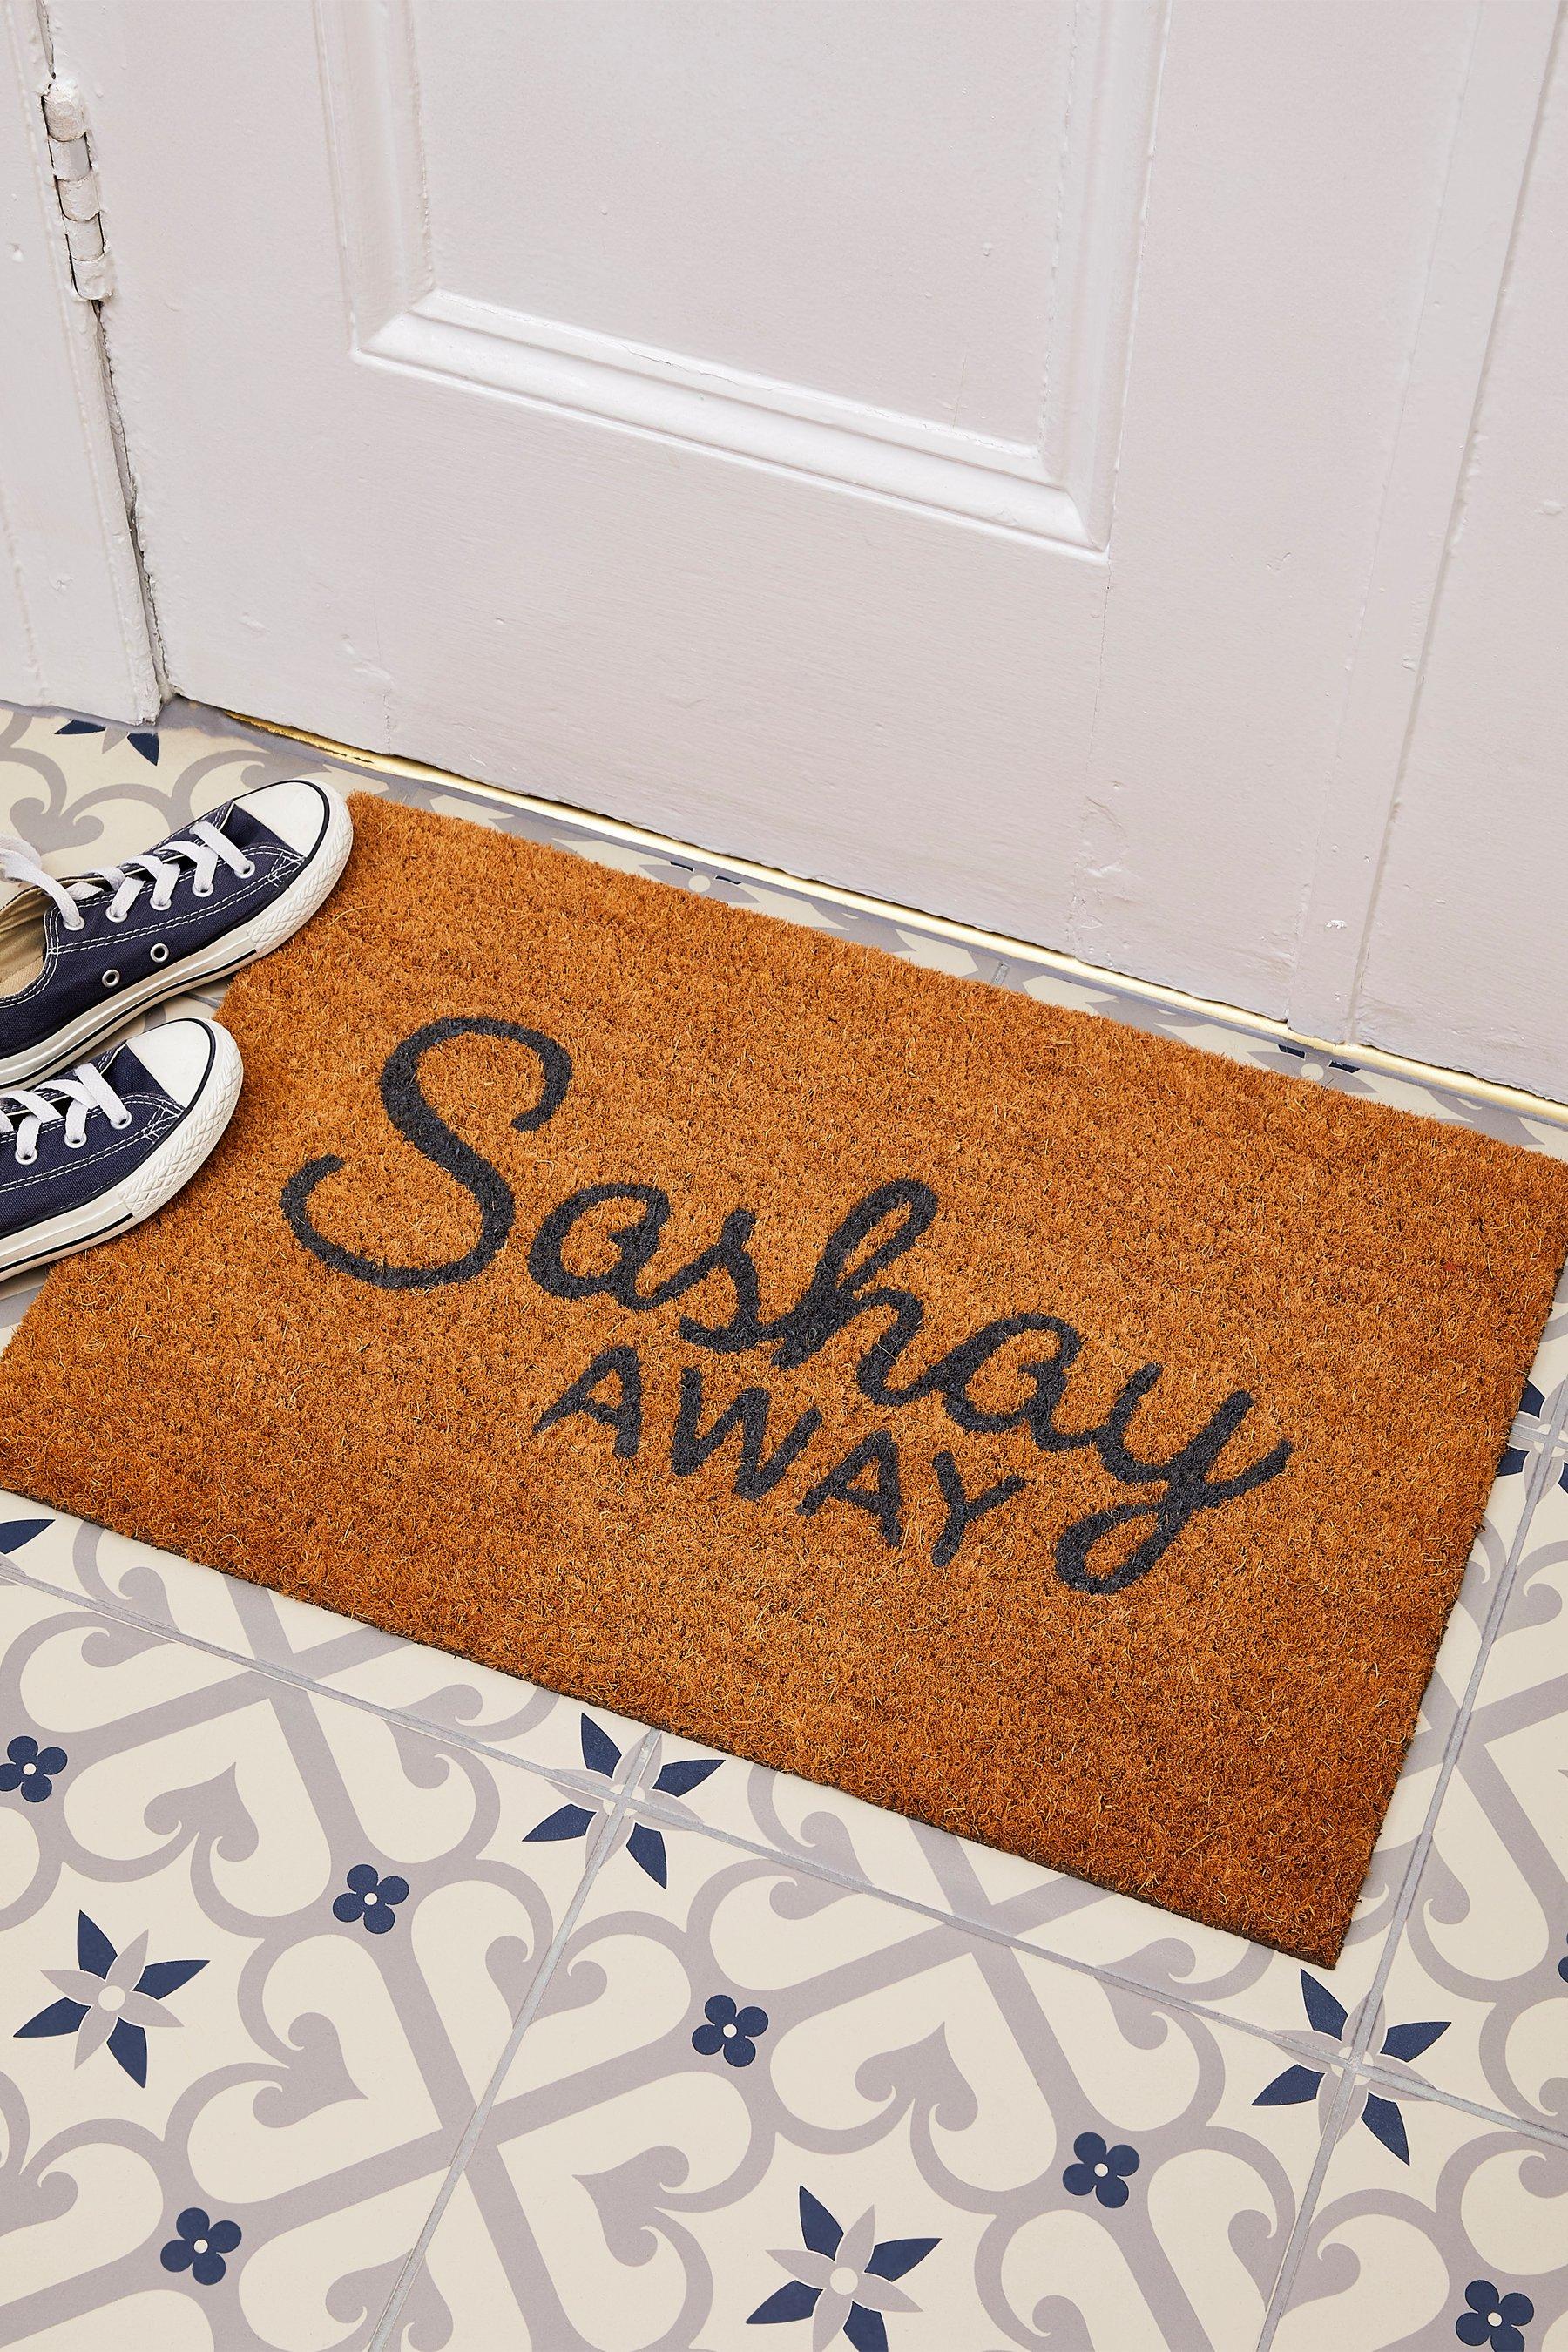 Astley Sashay Away Slogan Coir Door Mat - Size: 40X60cm - Natural